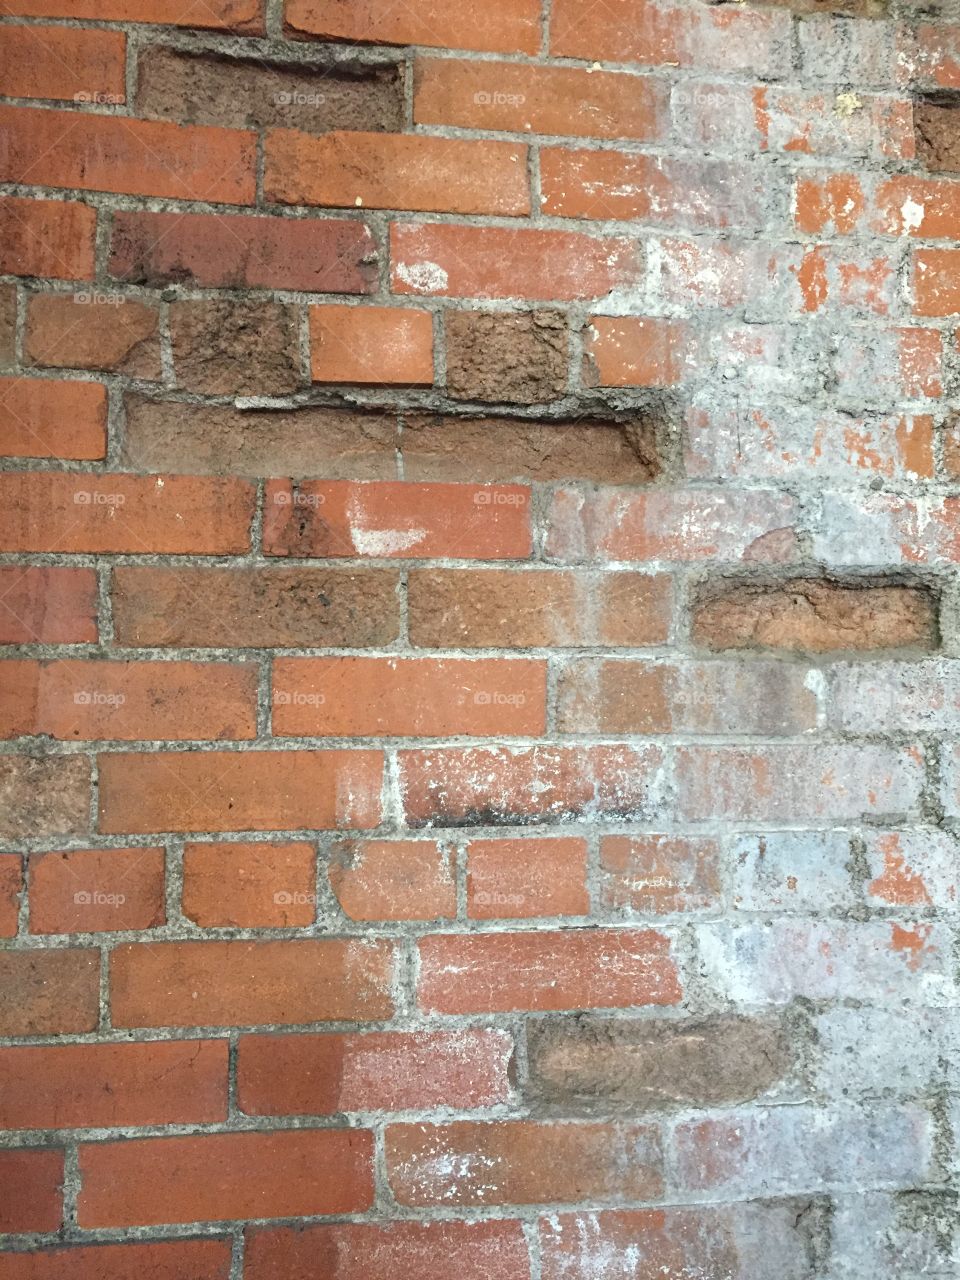 Do dogs pee on brick walls?